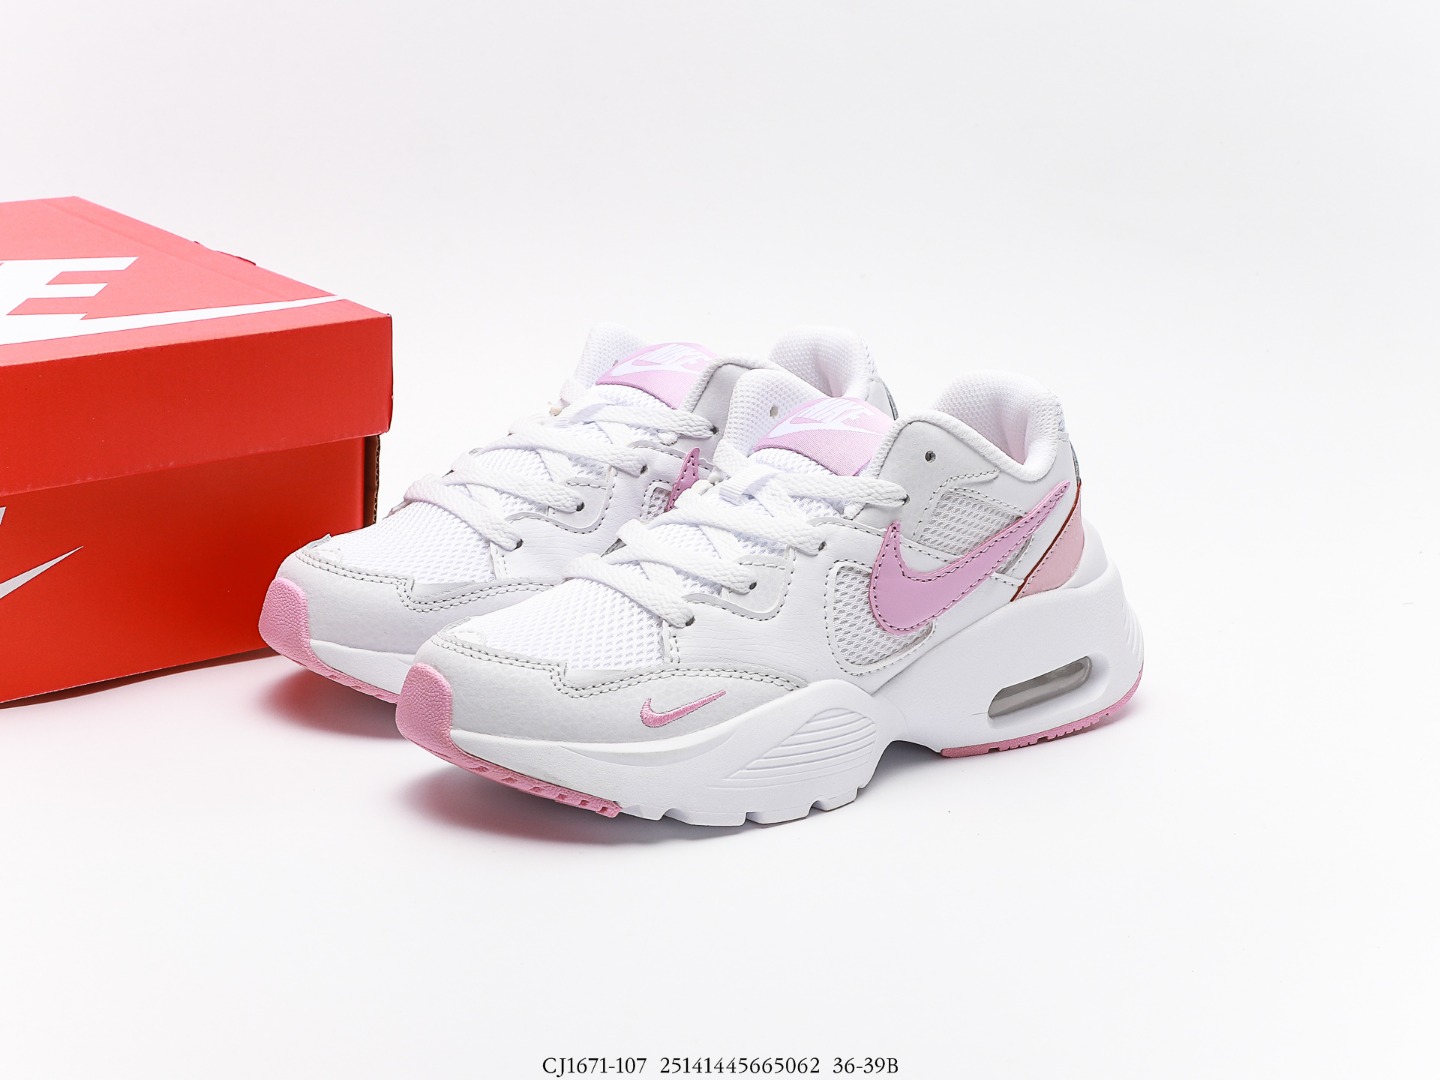 Nike Air Max Fusion branco rosa Glaze_CJ1671-107